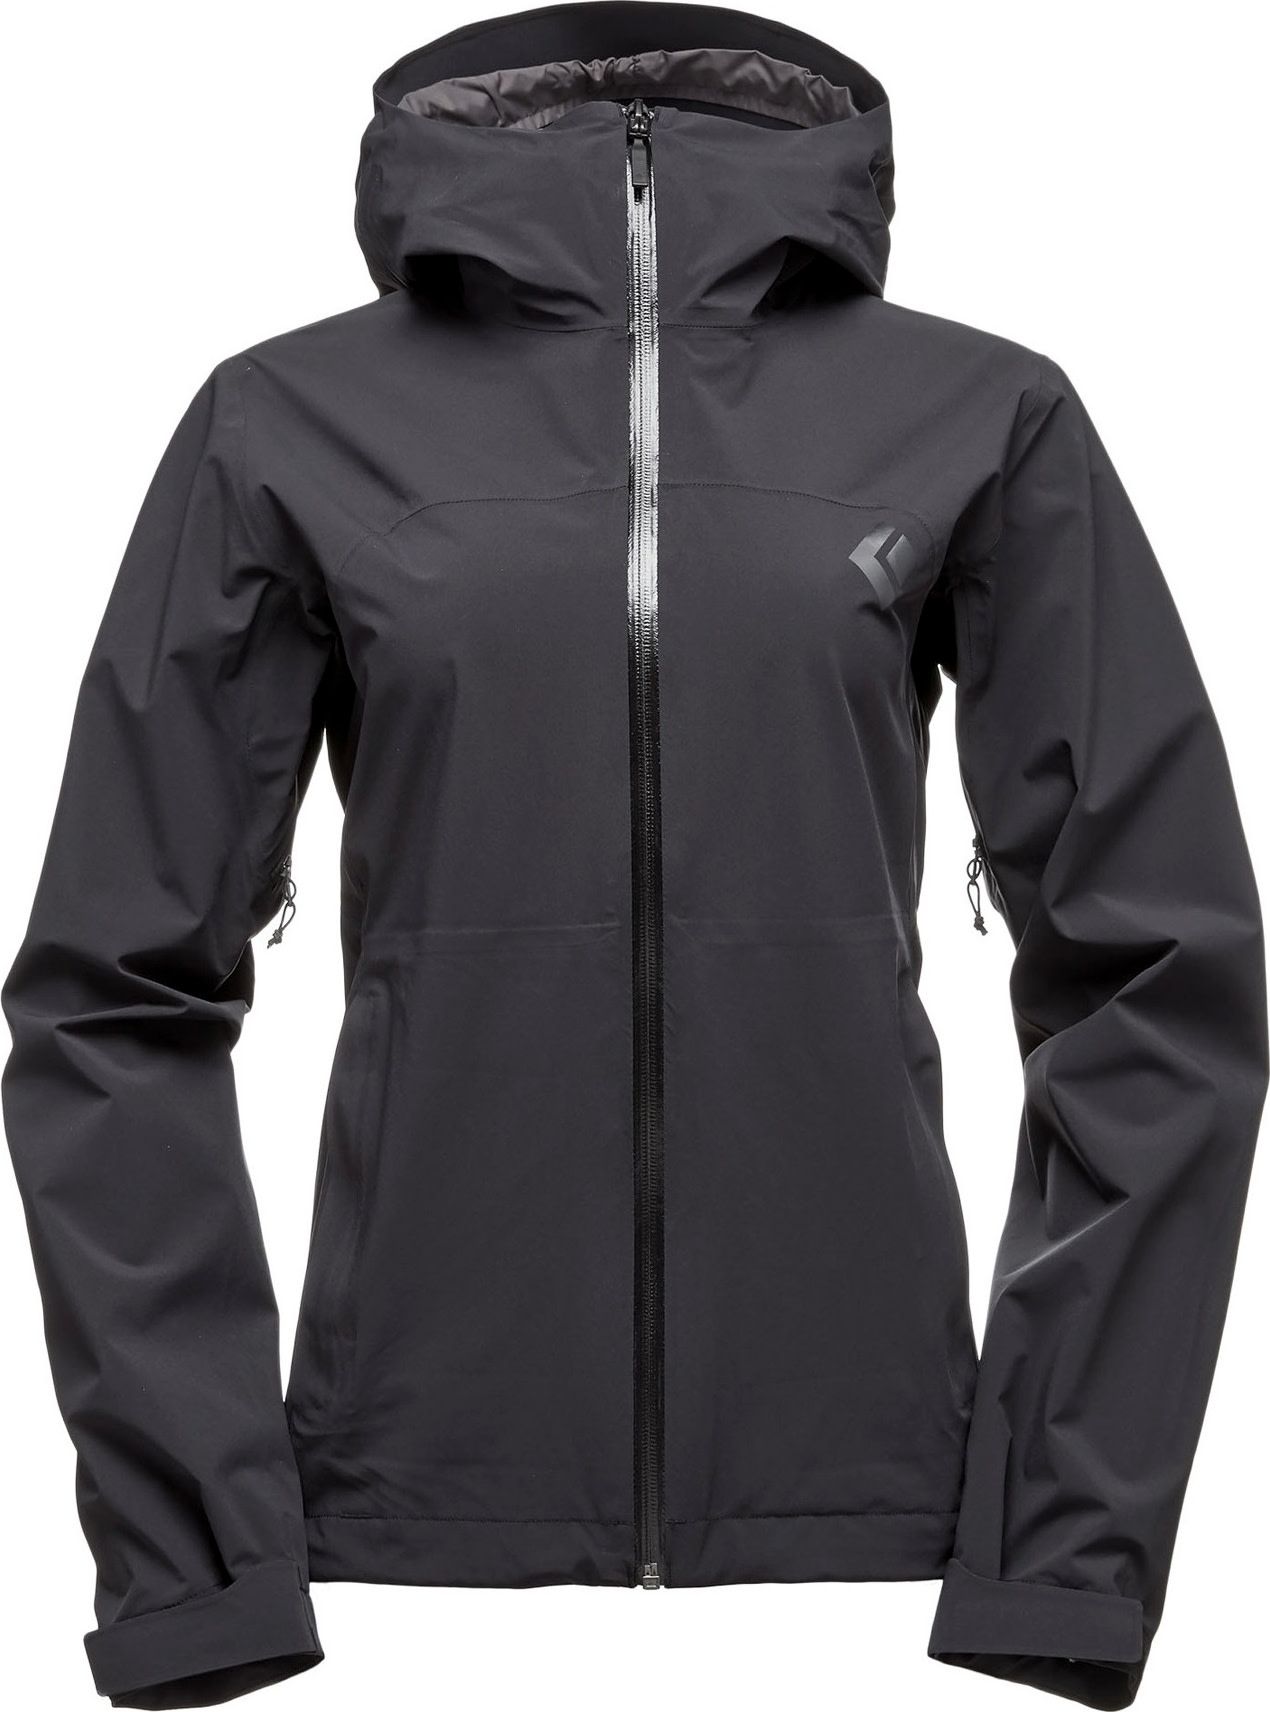 Women's StormLine Stretch Rain Shell Jacket Black